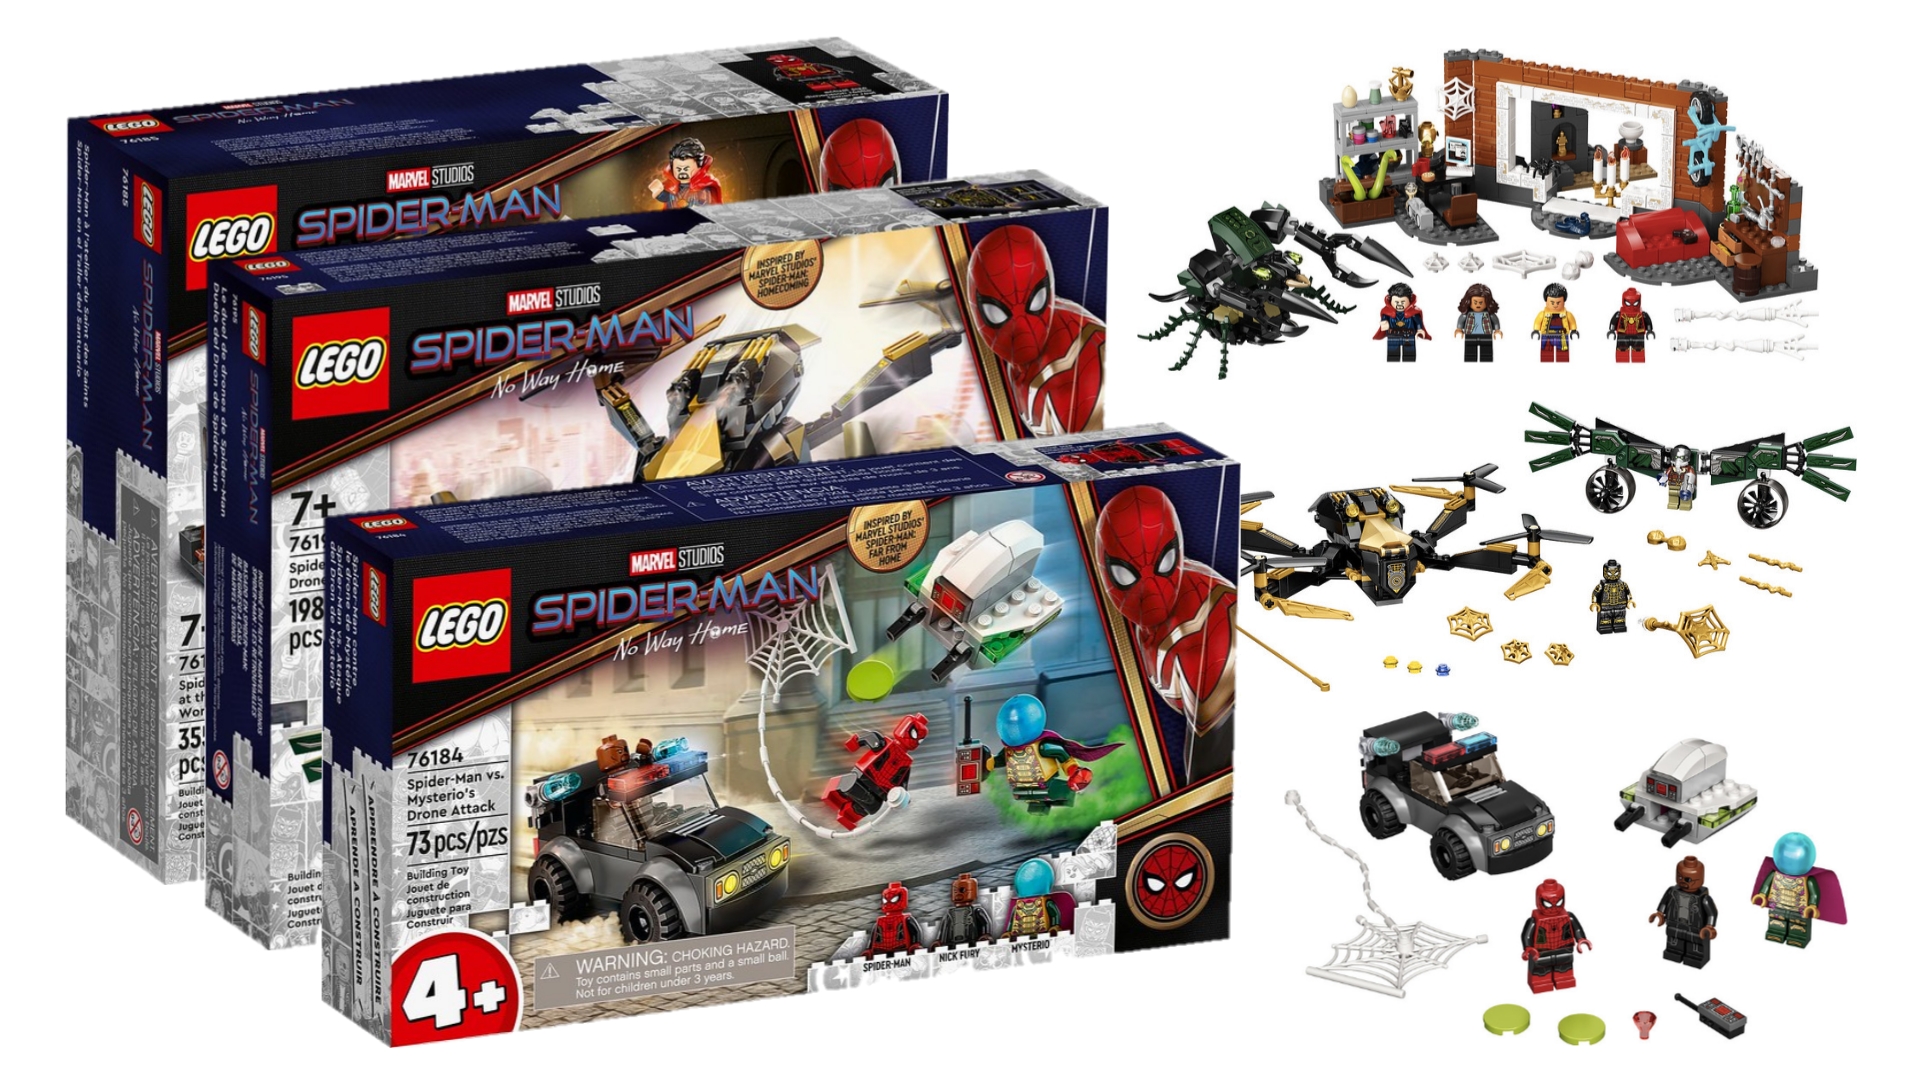 Three New LEGO Marvel SpiderMan Sets Revealed! The